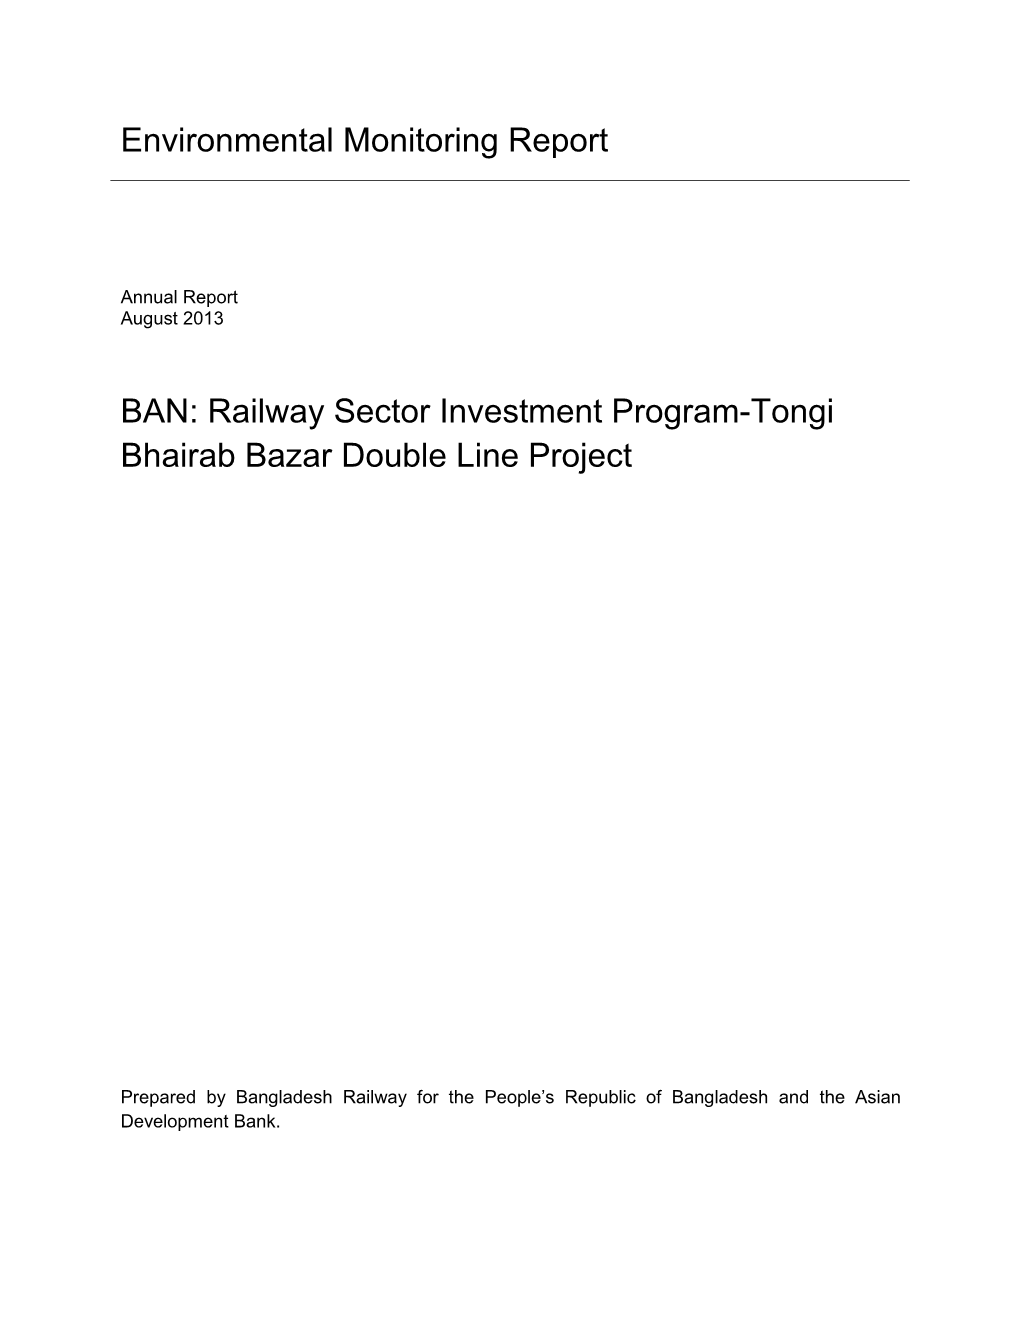 Environmental Monitoring Report BAN: Railway Sector Investment